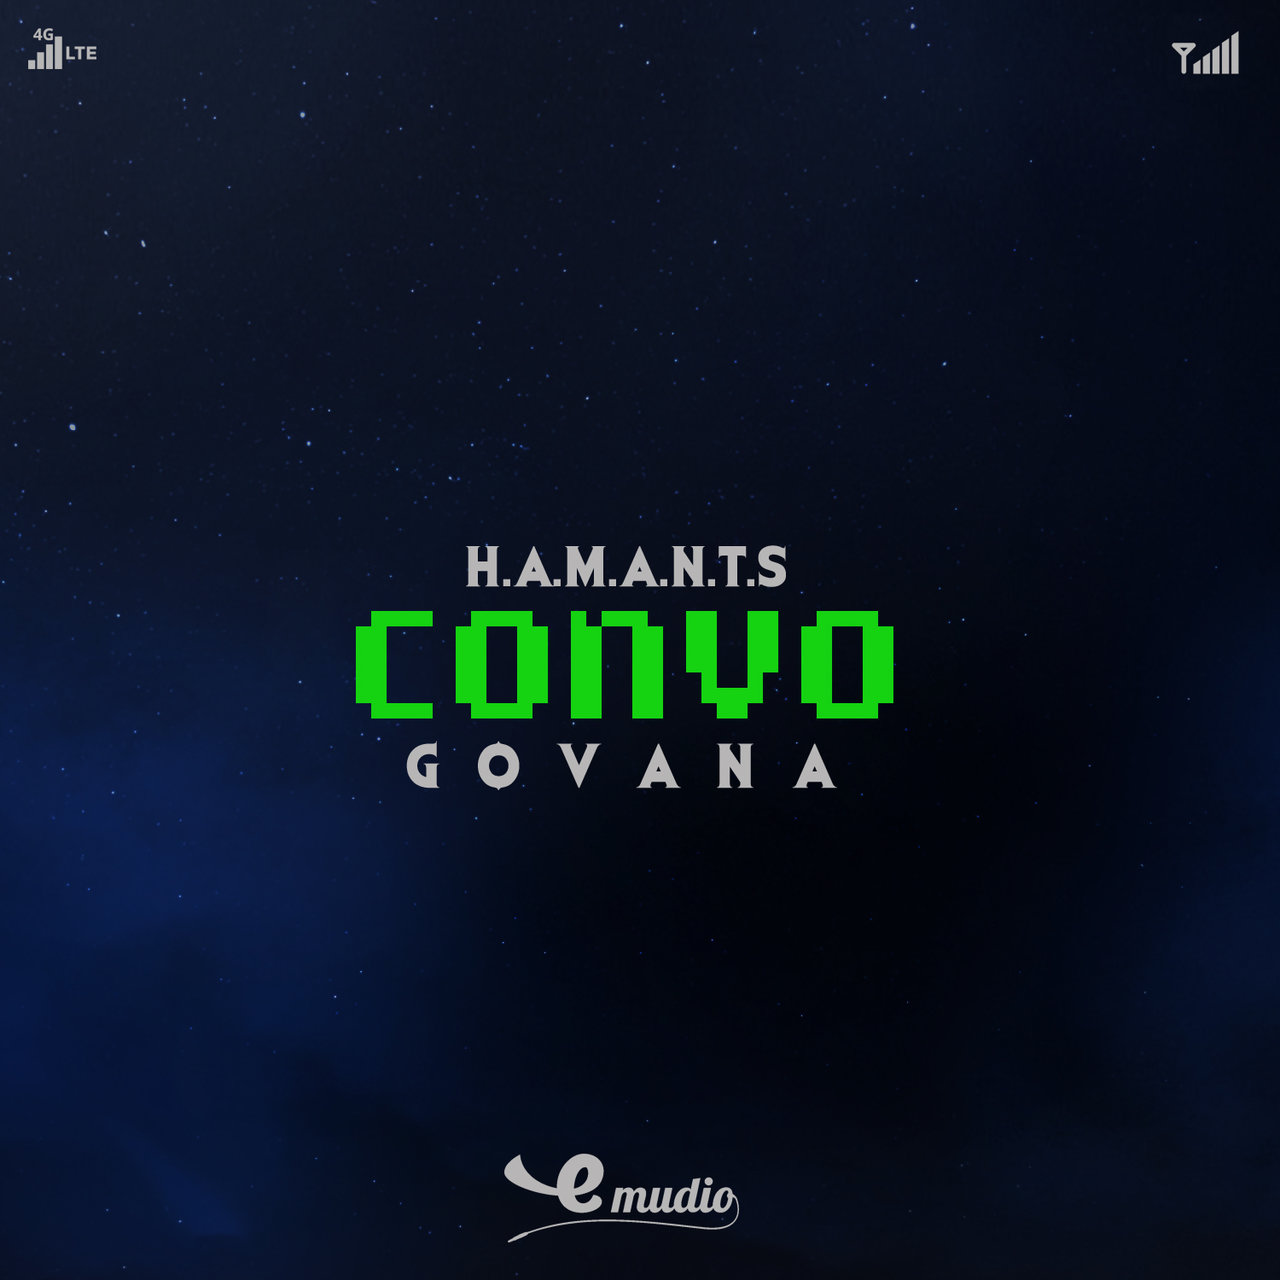 Govana - Hamants Convo (Cover)